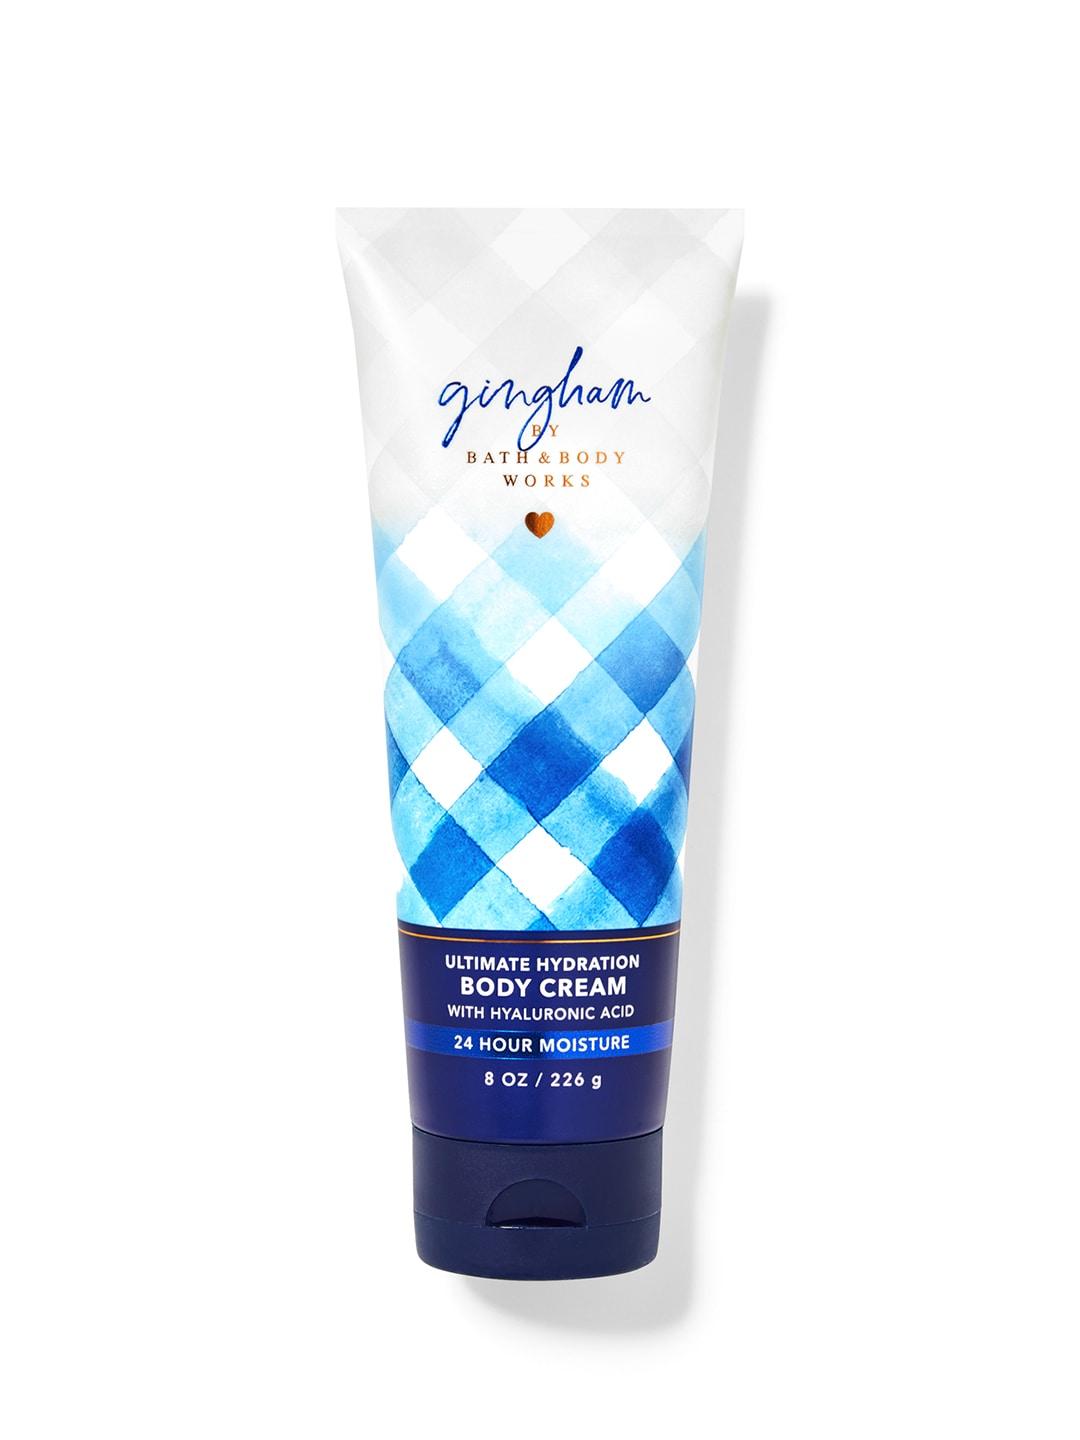 Bath & Body Works Gingham Ultimate Hydration Body Cream with Hyaluronic Acid-226 g